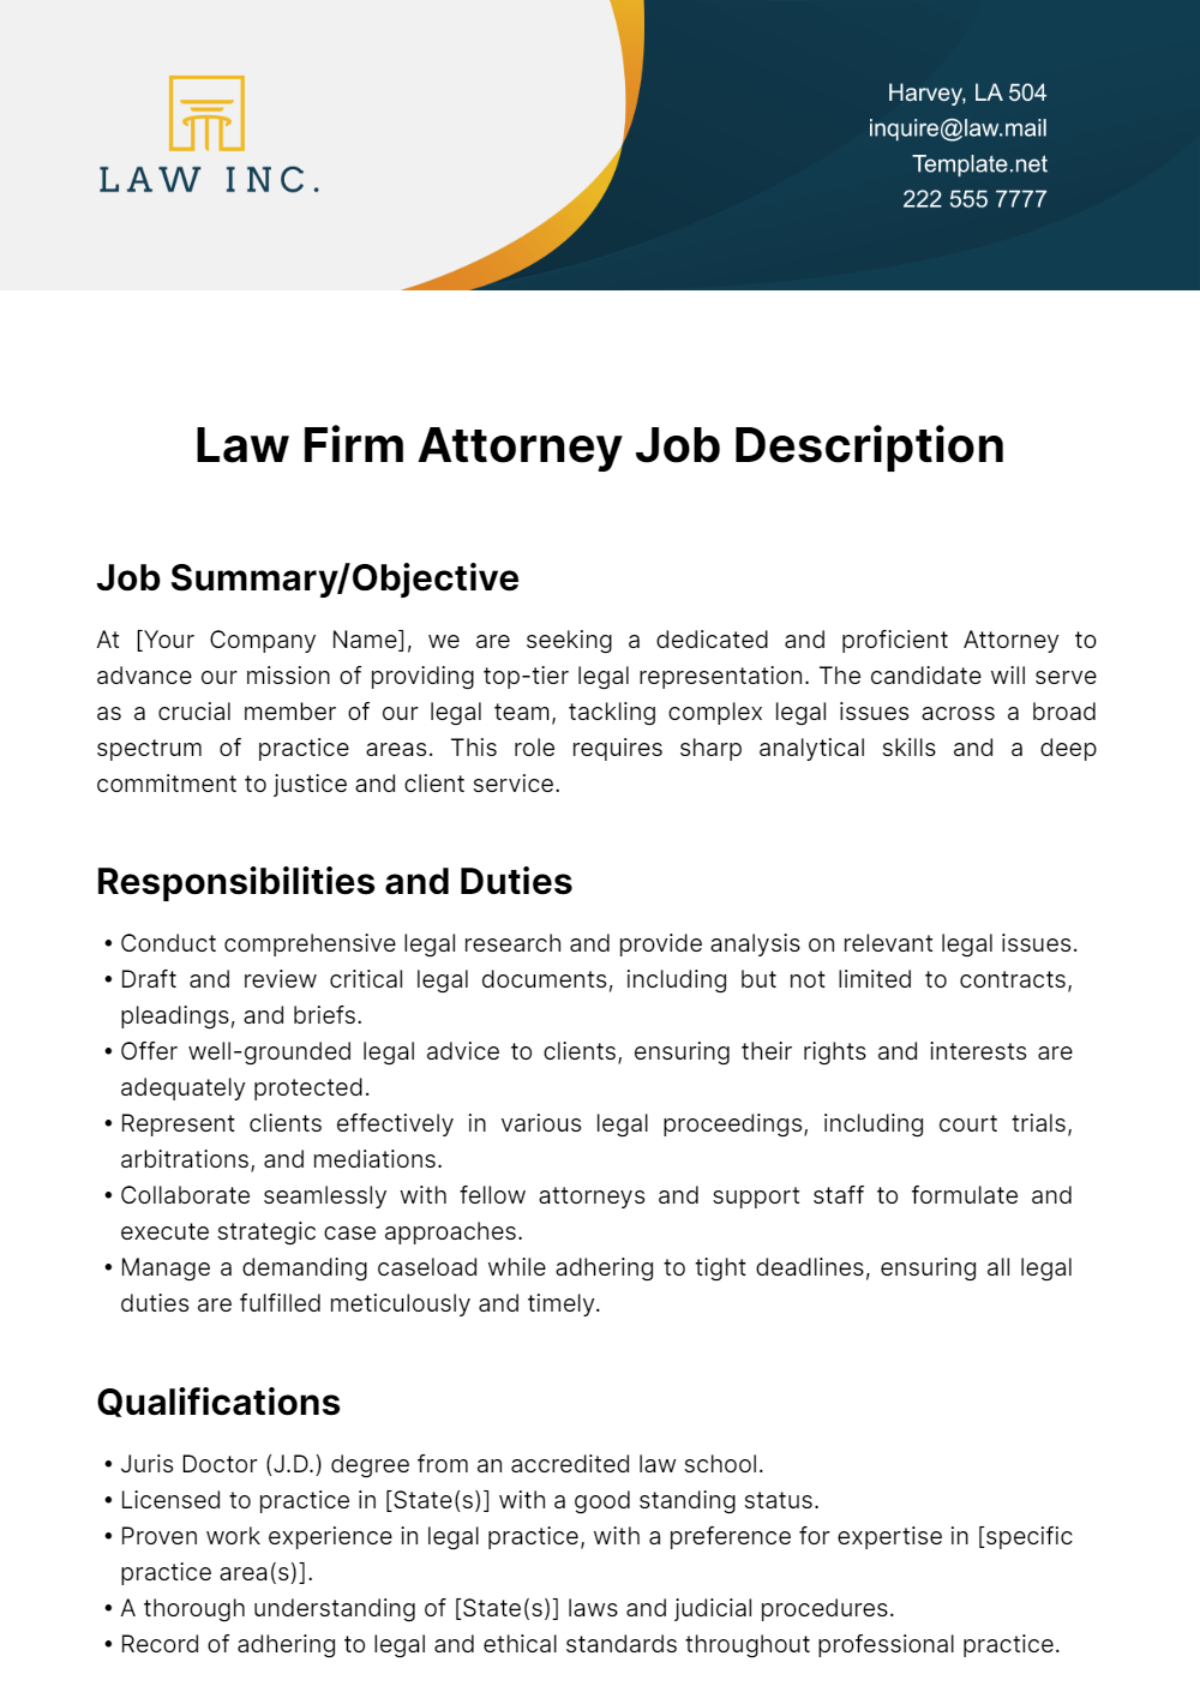 Free Law Firm Attorney Job Description Template